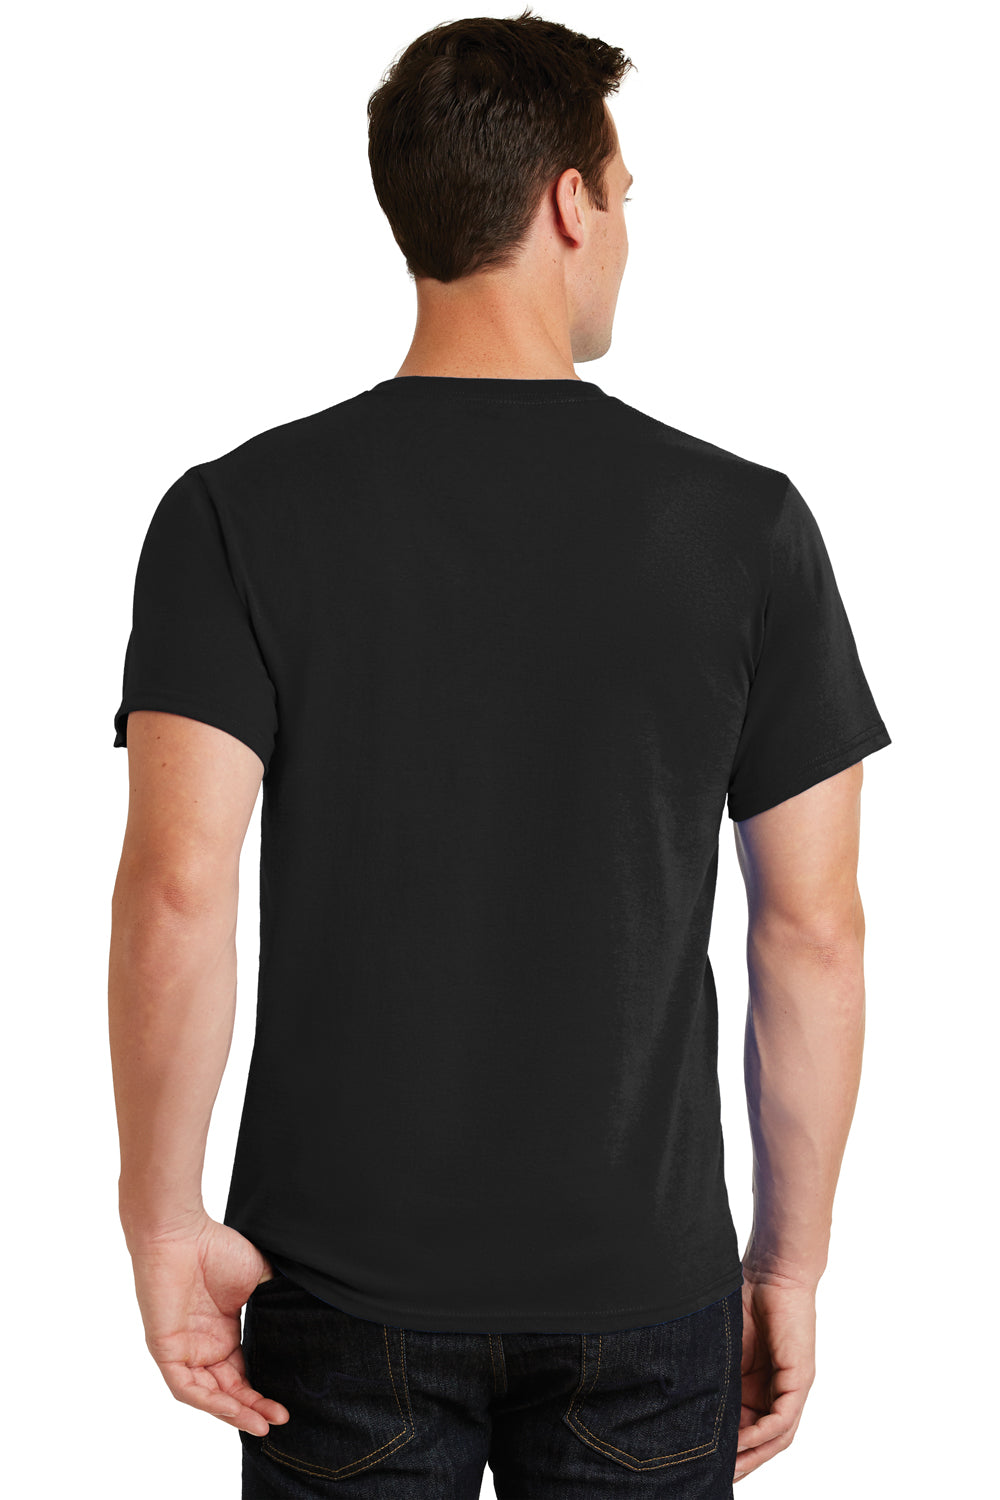 Port & Company PC61 Mens Essential Short Sleeve Crewneck T-Shirt Black Back